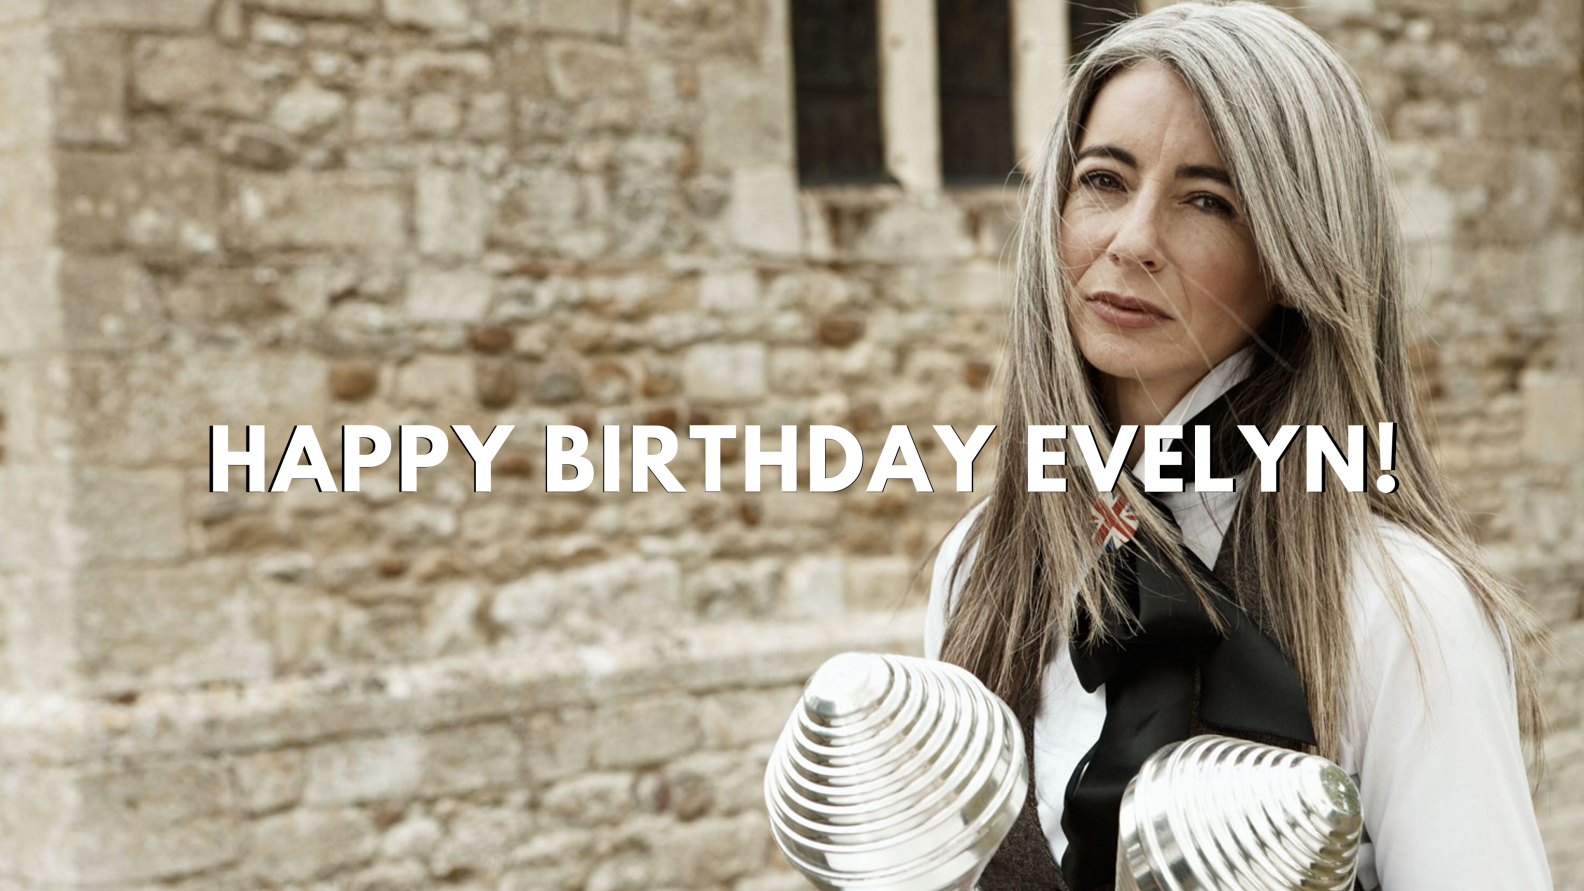 It's Evelyn's birthday!